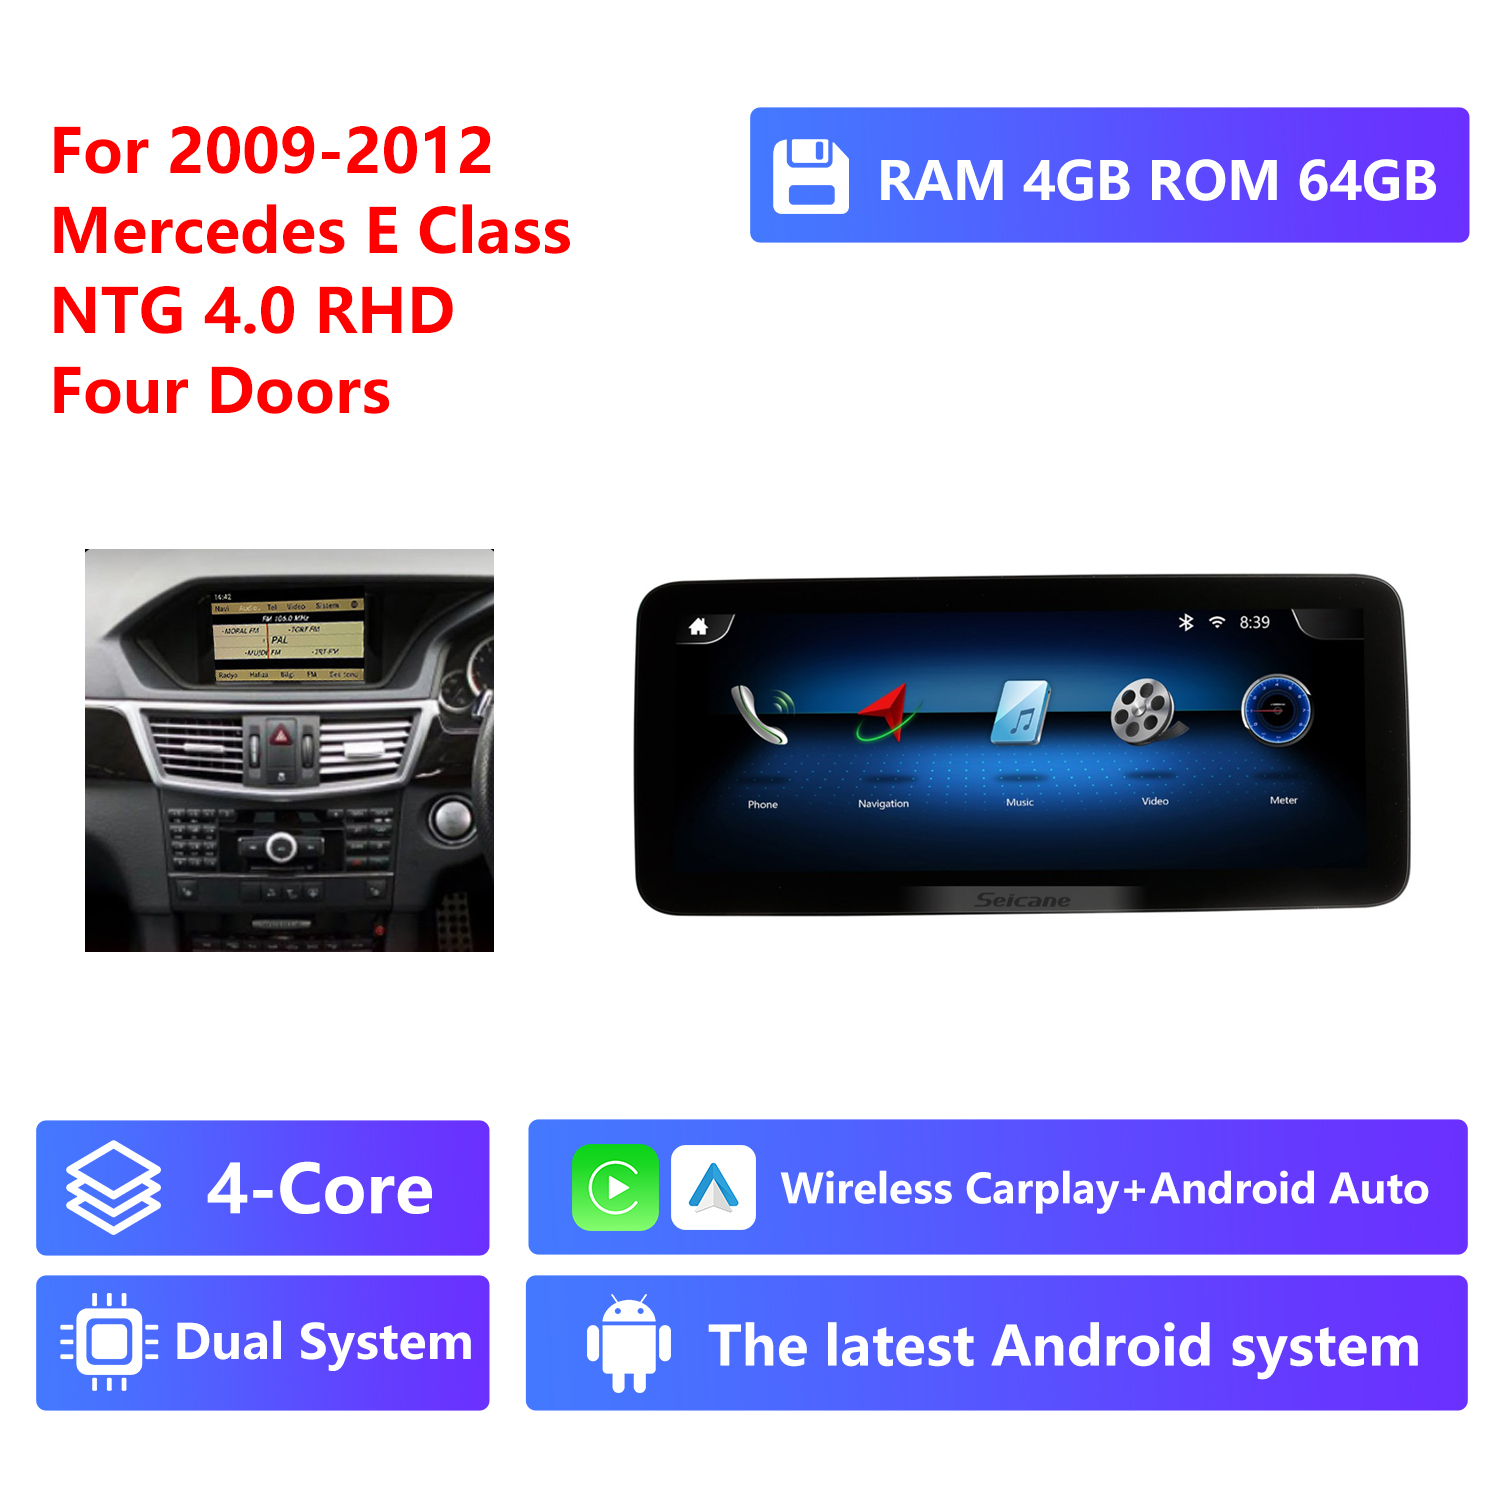 4-Core RAM 4G ROM 64G,RHD,NTG4.0,four doors